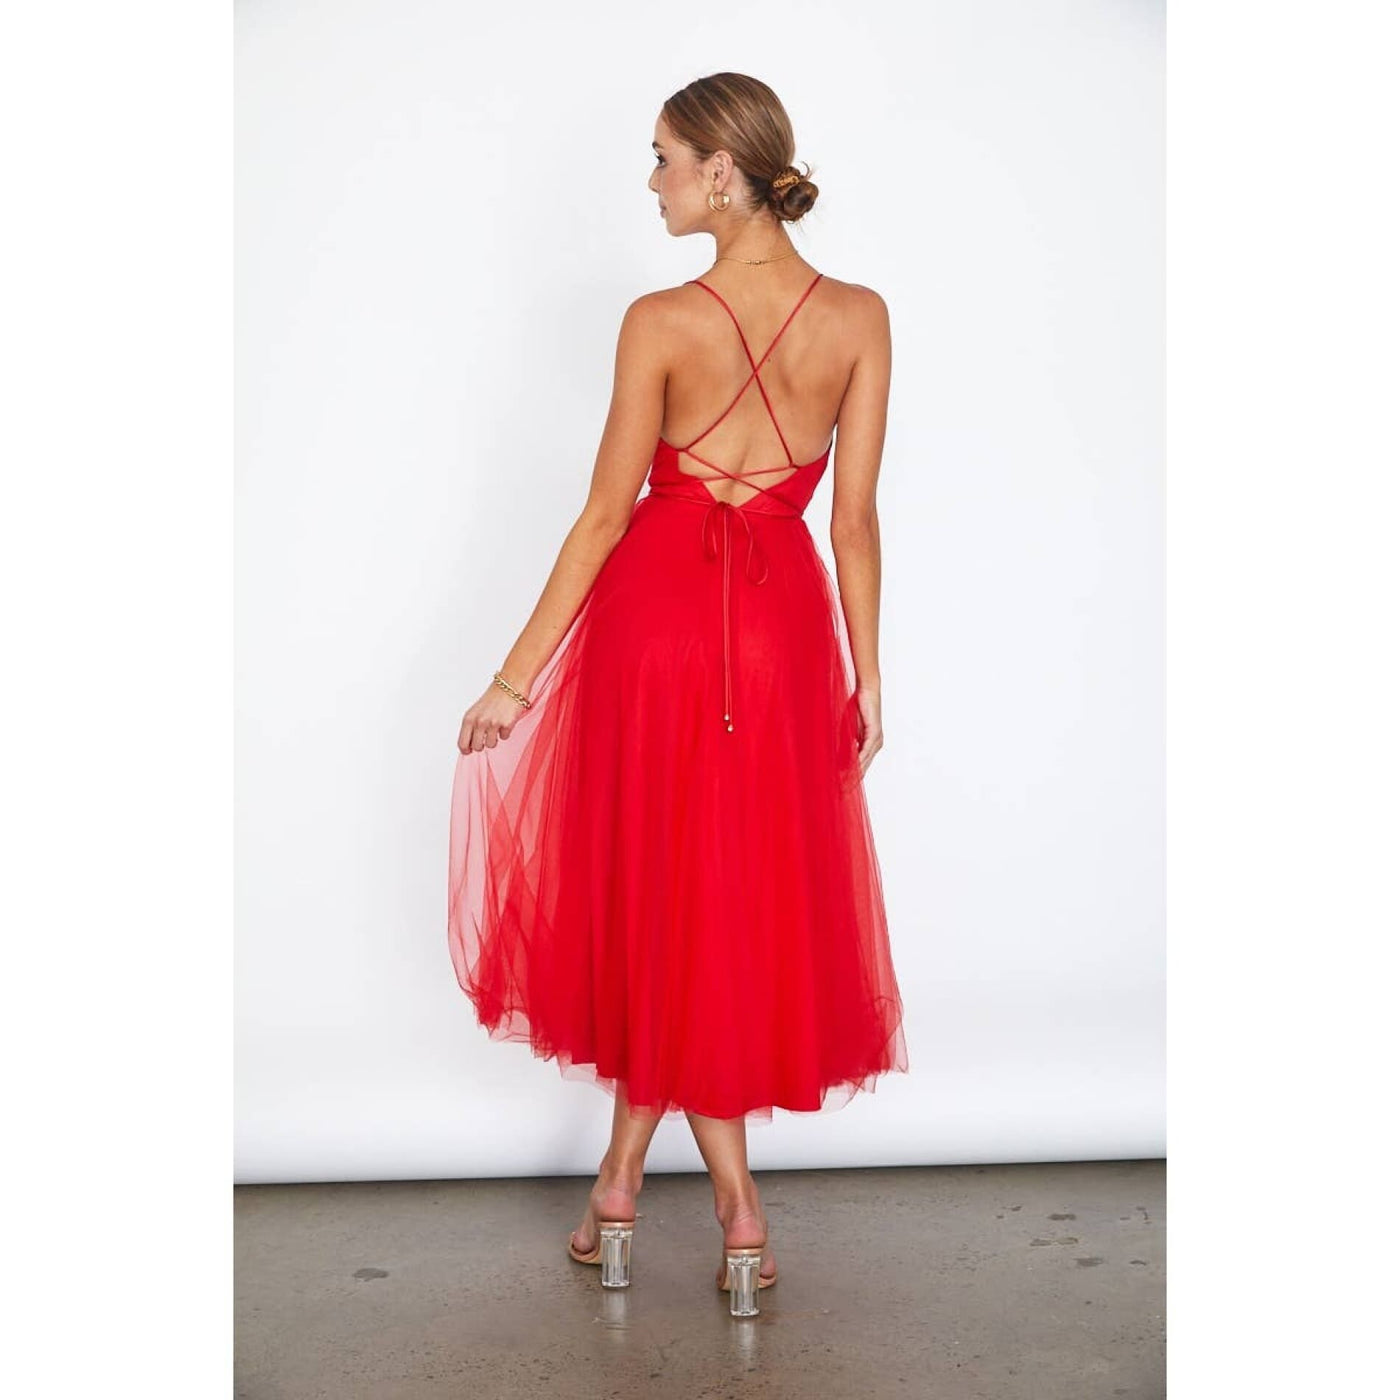 The Sweetest Love Midi Dress - 175 Evening Dresses/Jumpsuits/Rompers